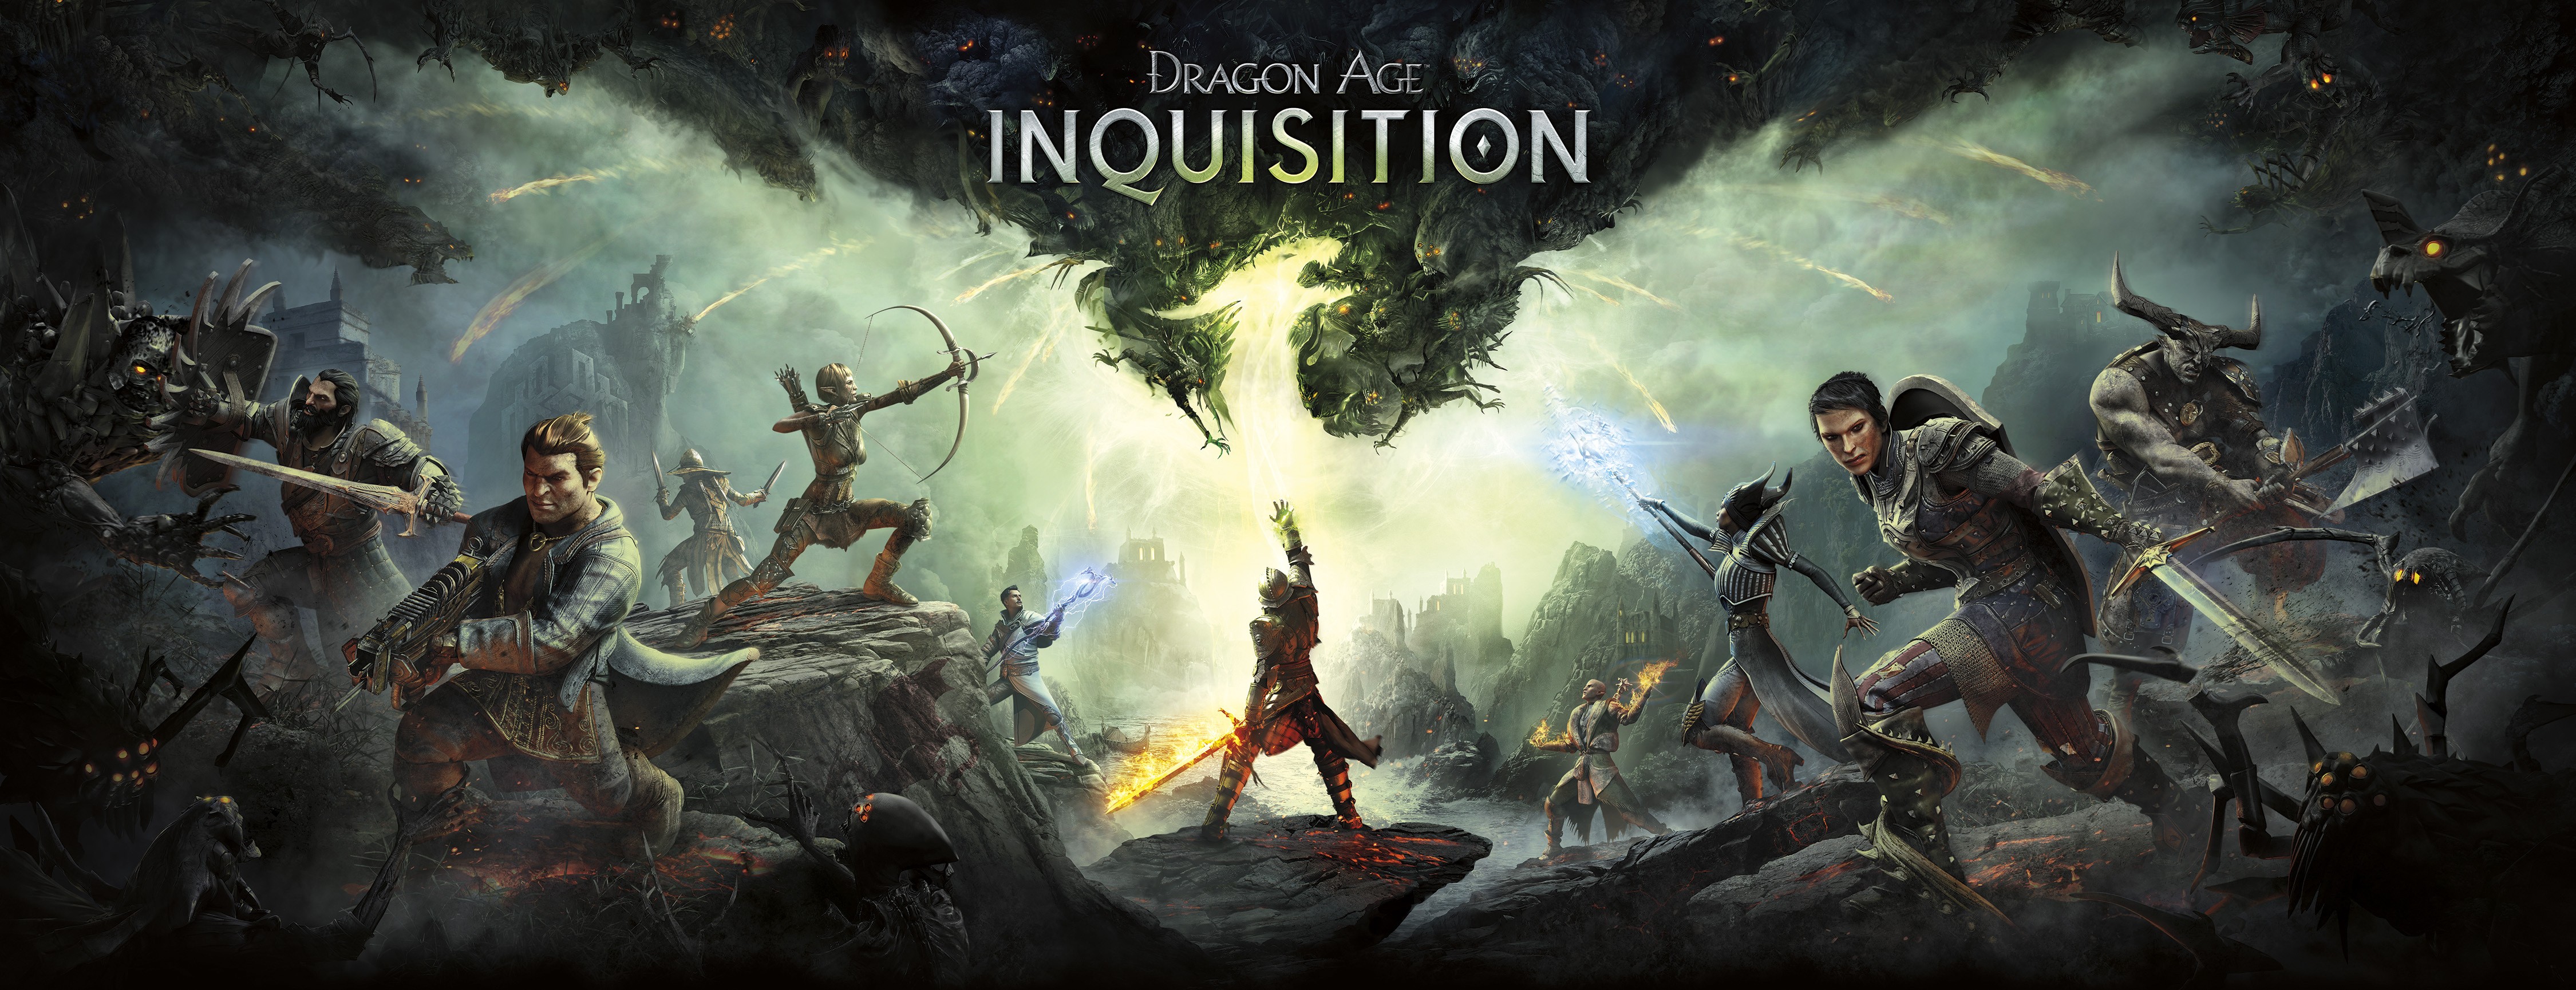 Dragon Age Inquisition, Dragon, Bow And Arrow, Sword, Magic, Bioware, EA, Video Games Wallpaper